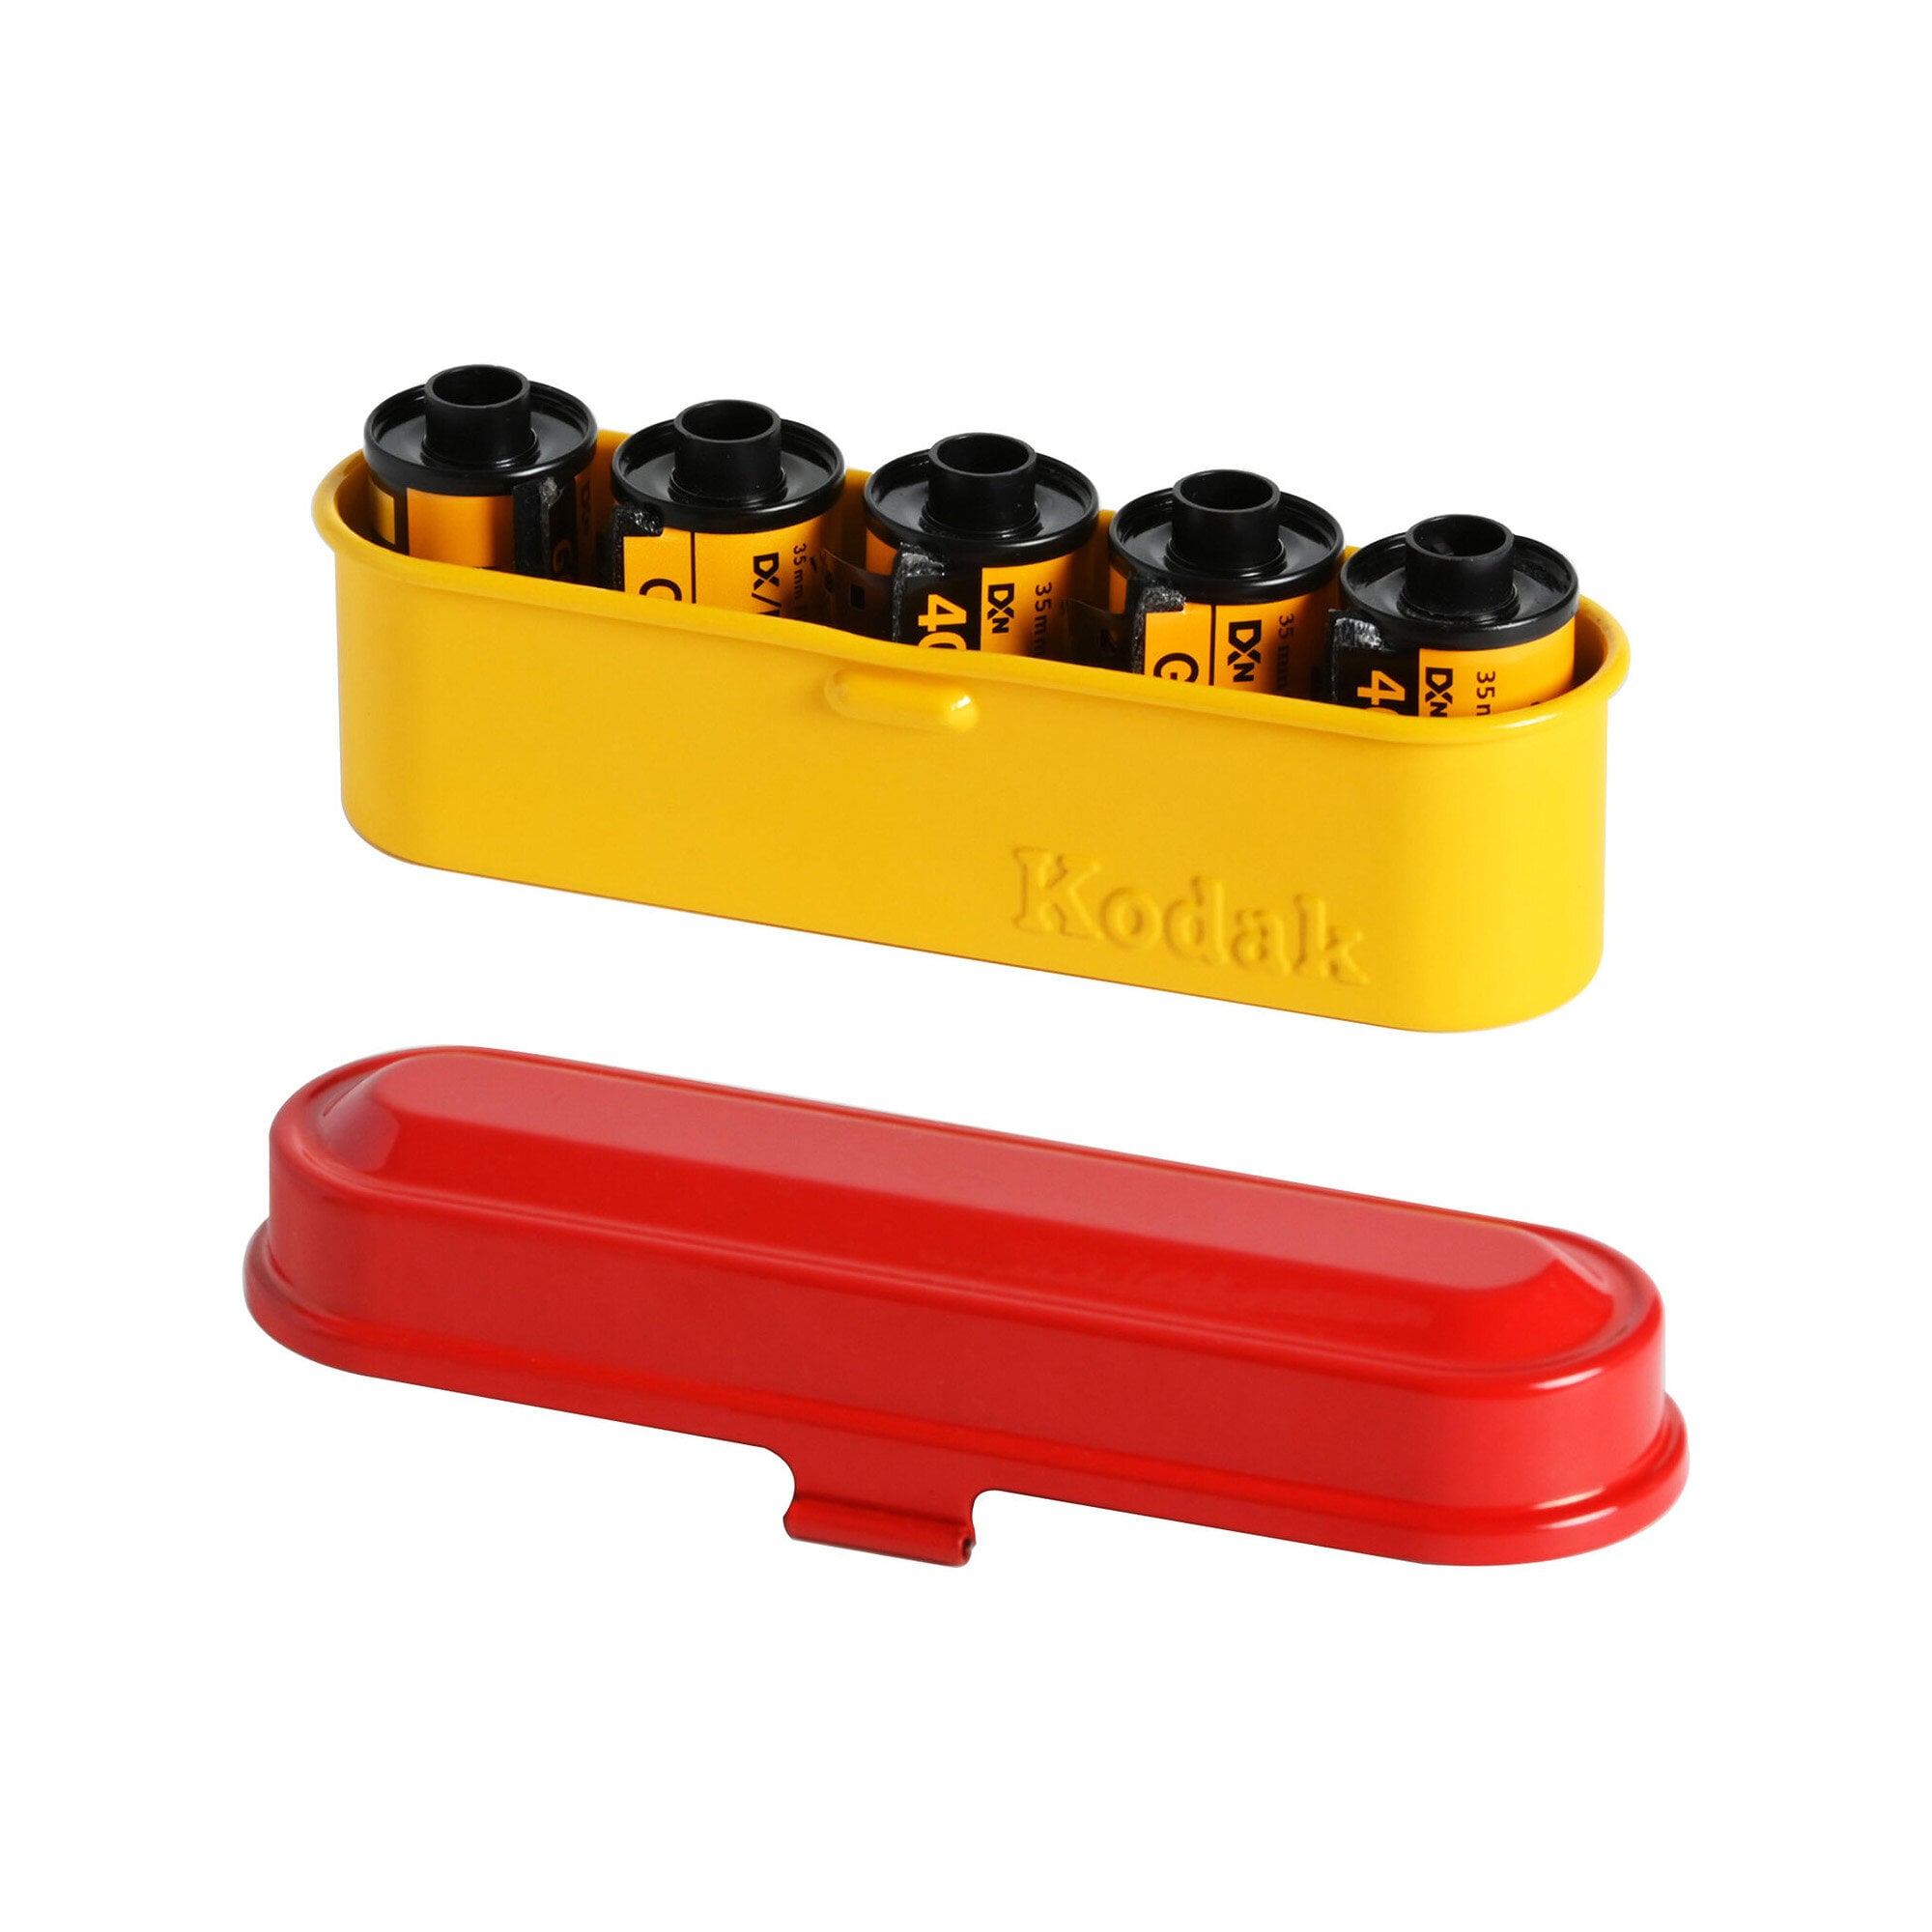 Kodak Film Steel Case Yellow with Red lid 135